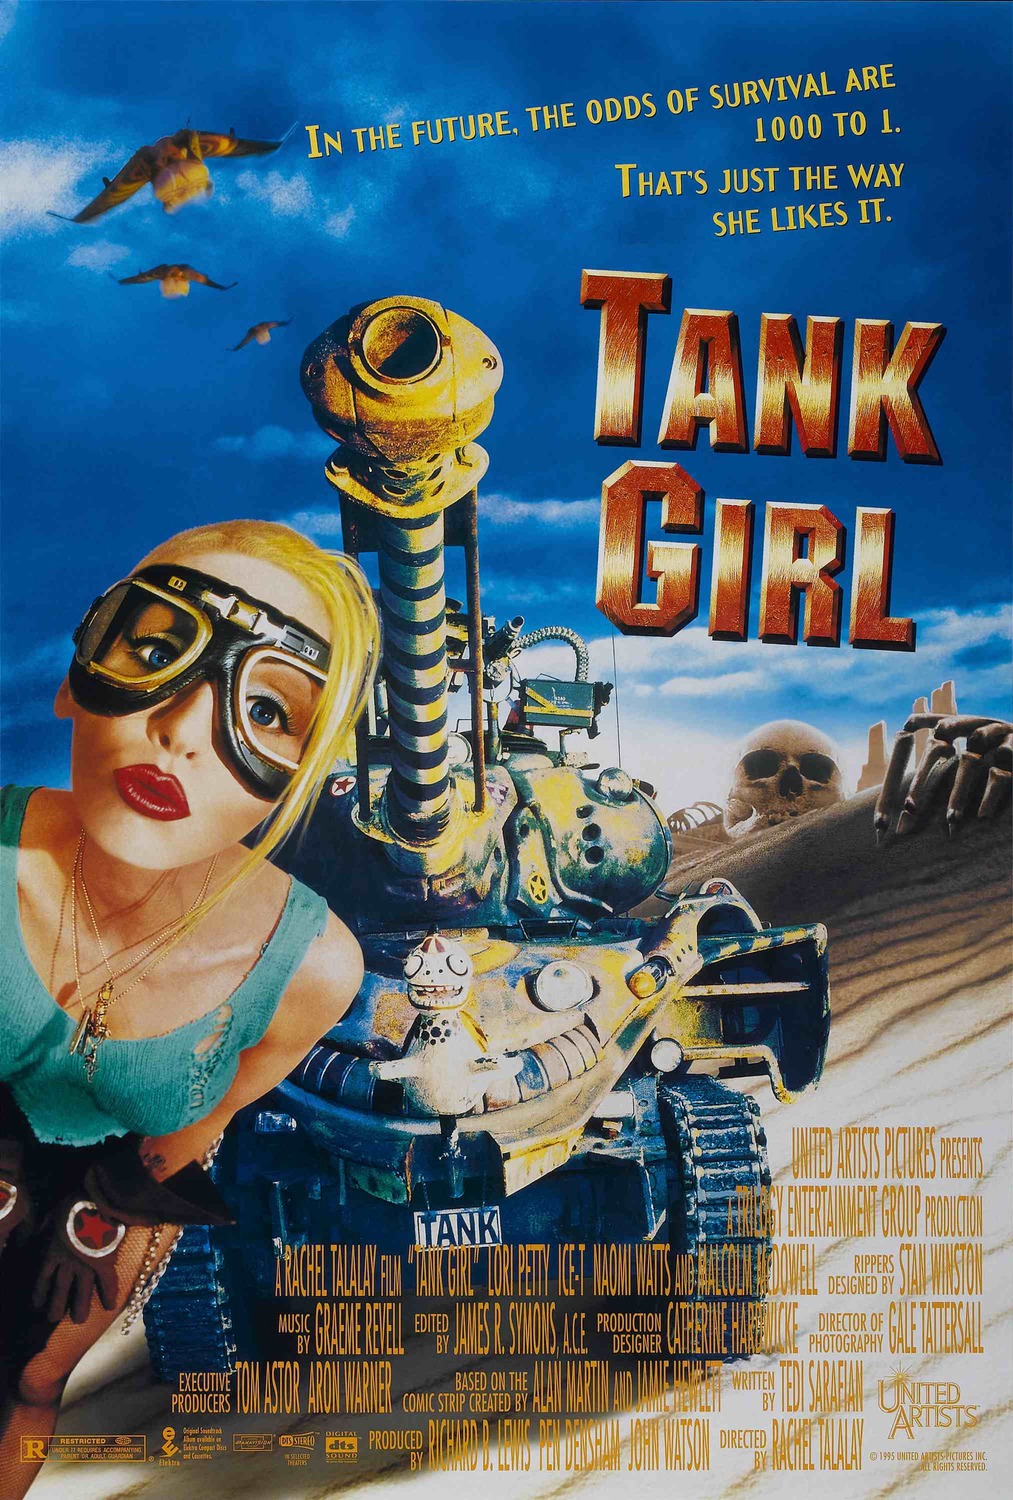 Tank Girl : Two Girls One Tank #2 by blitzcadet on DeviantArt